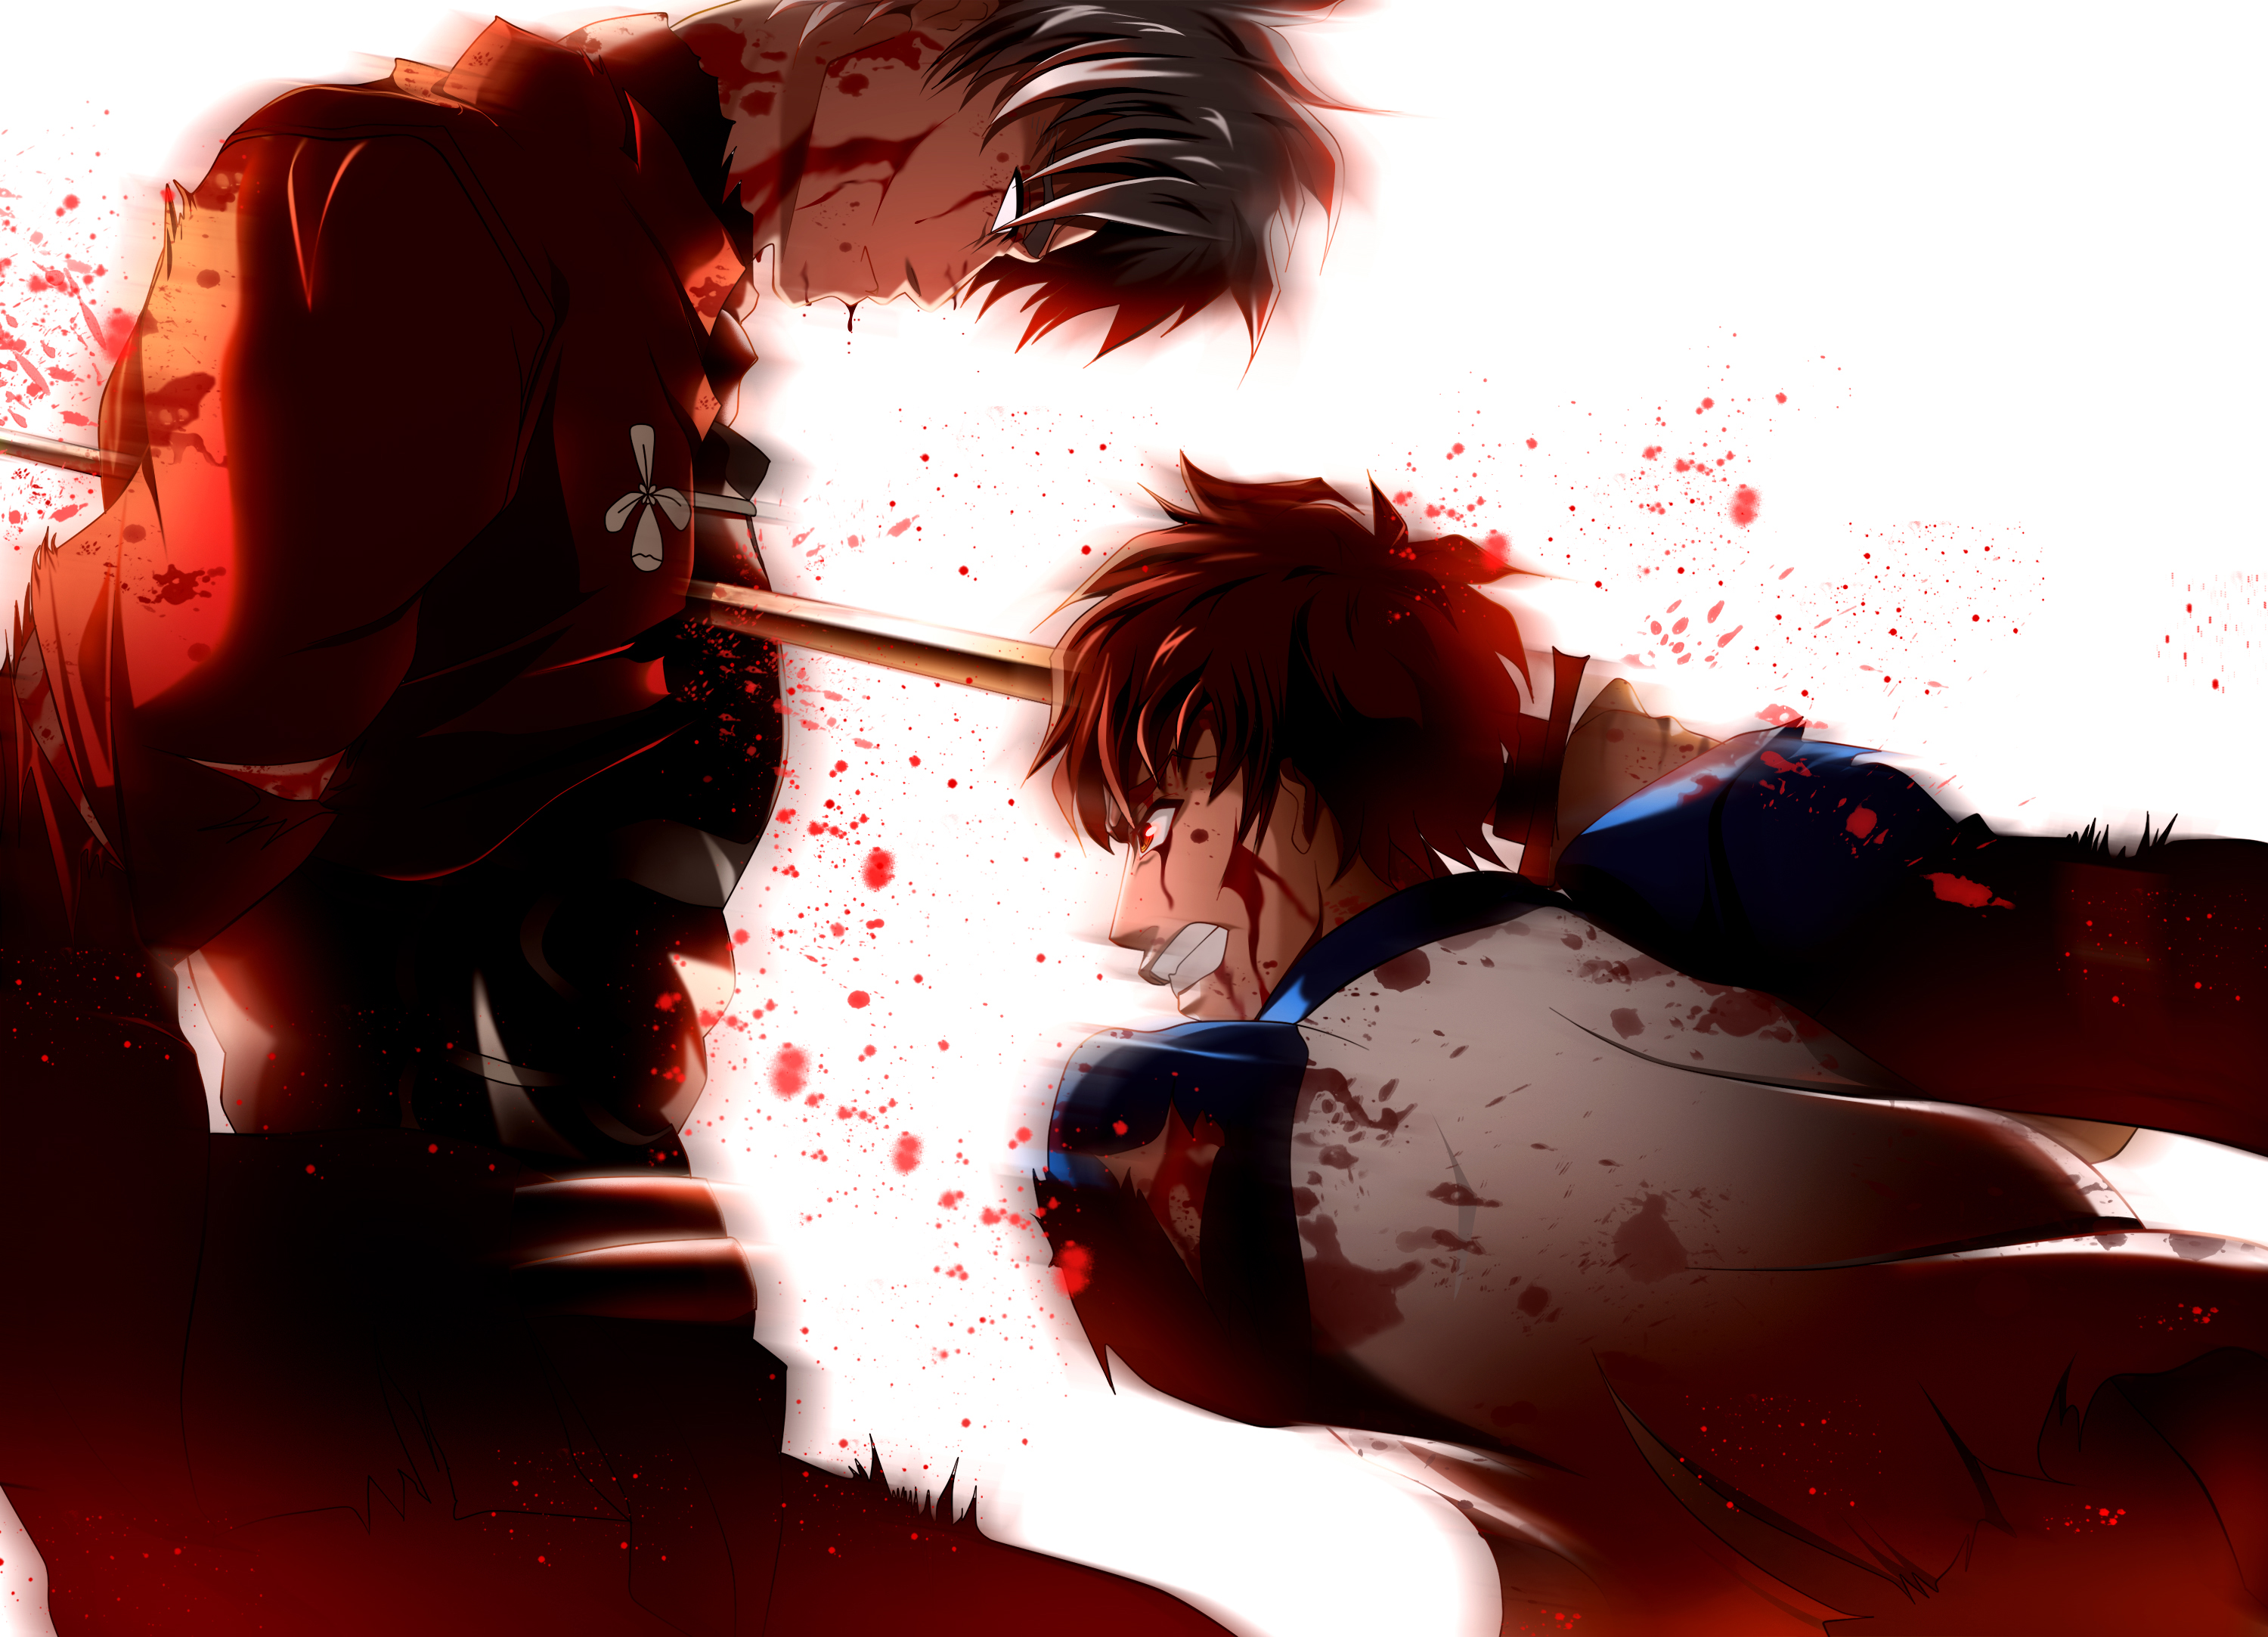 Archer Blood Emiya Shirou Fate Stay Night Katana Skyt2 Sword Weapon Wallpapers Hd Desktop And Mobile Backgrounds